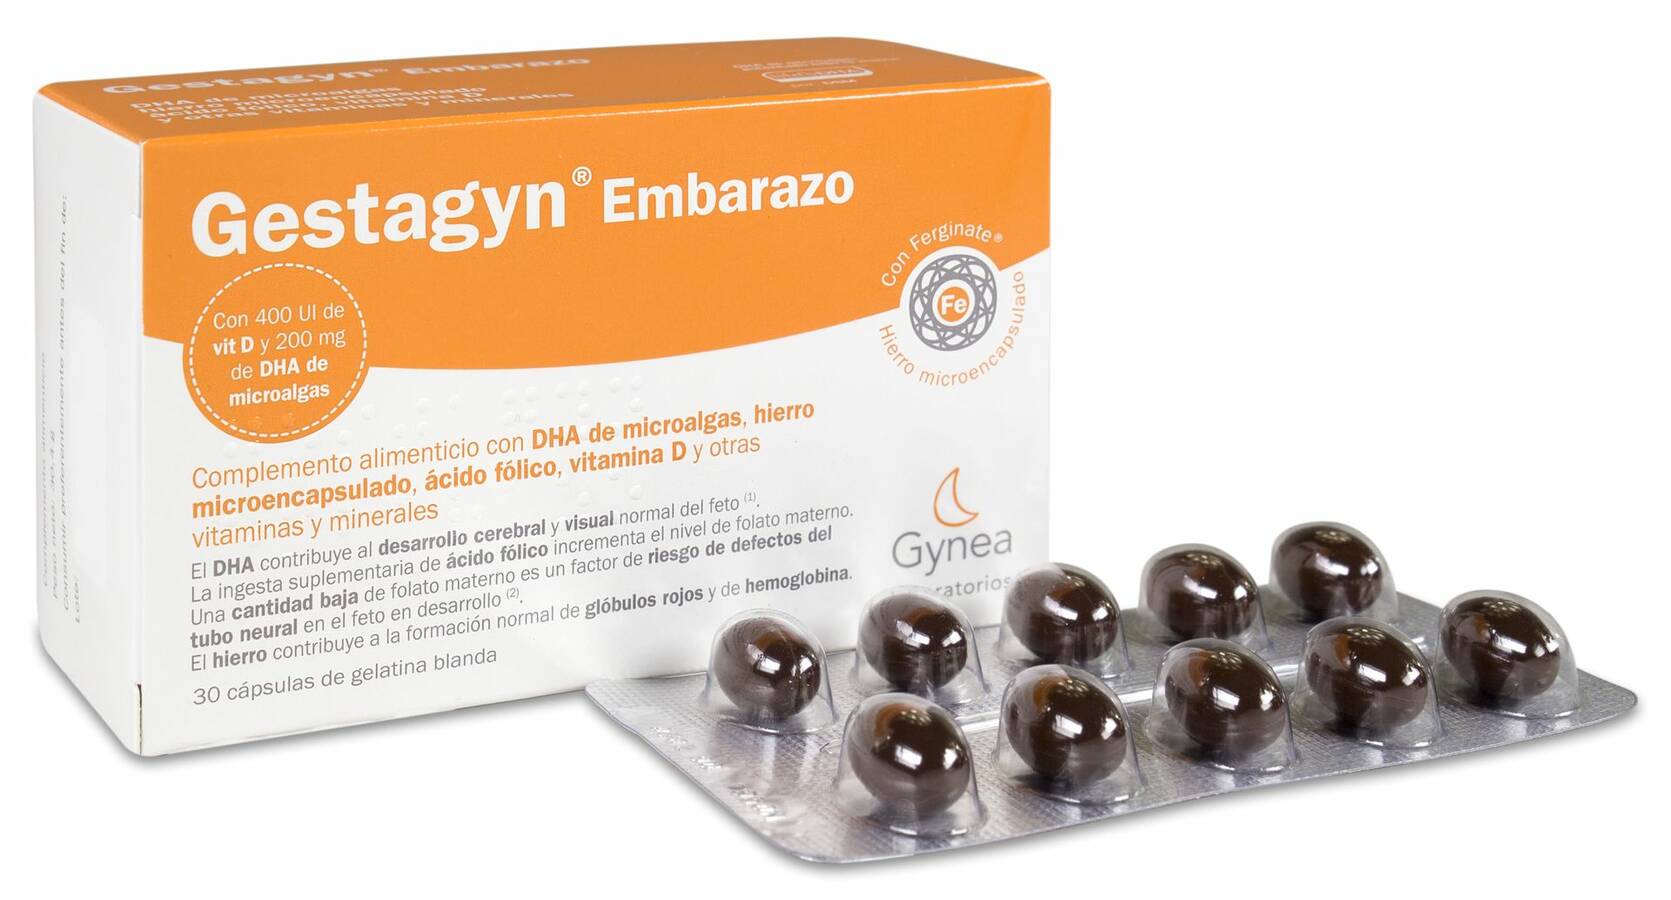 Gestagyn Embarazo Dha 30 cápsulas gelatina 1604019 Sistema genital